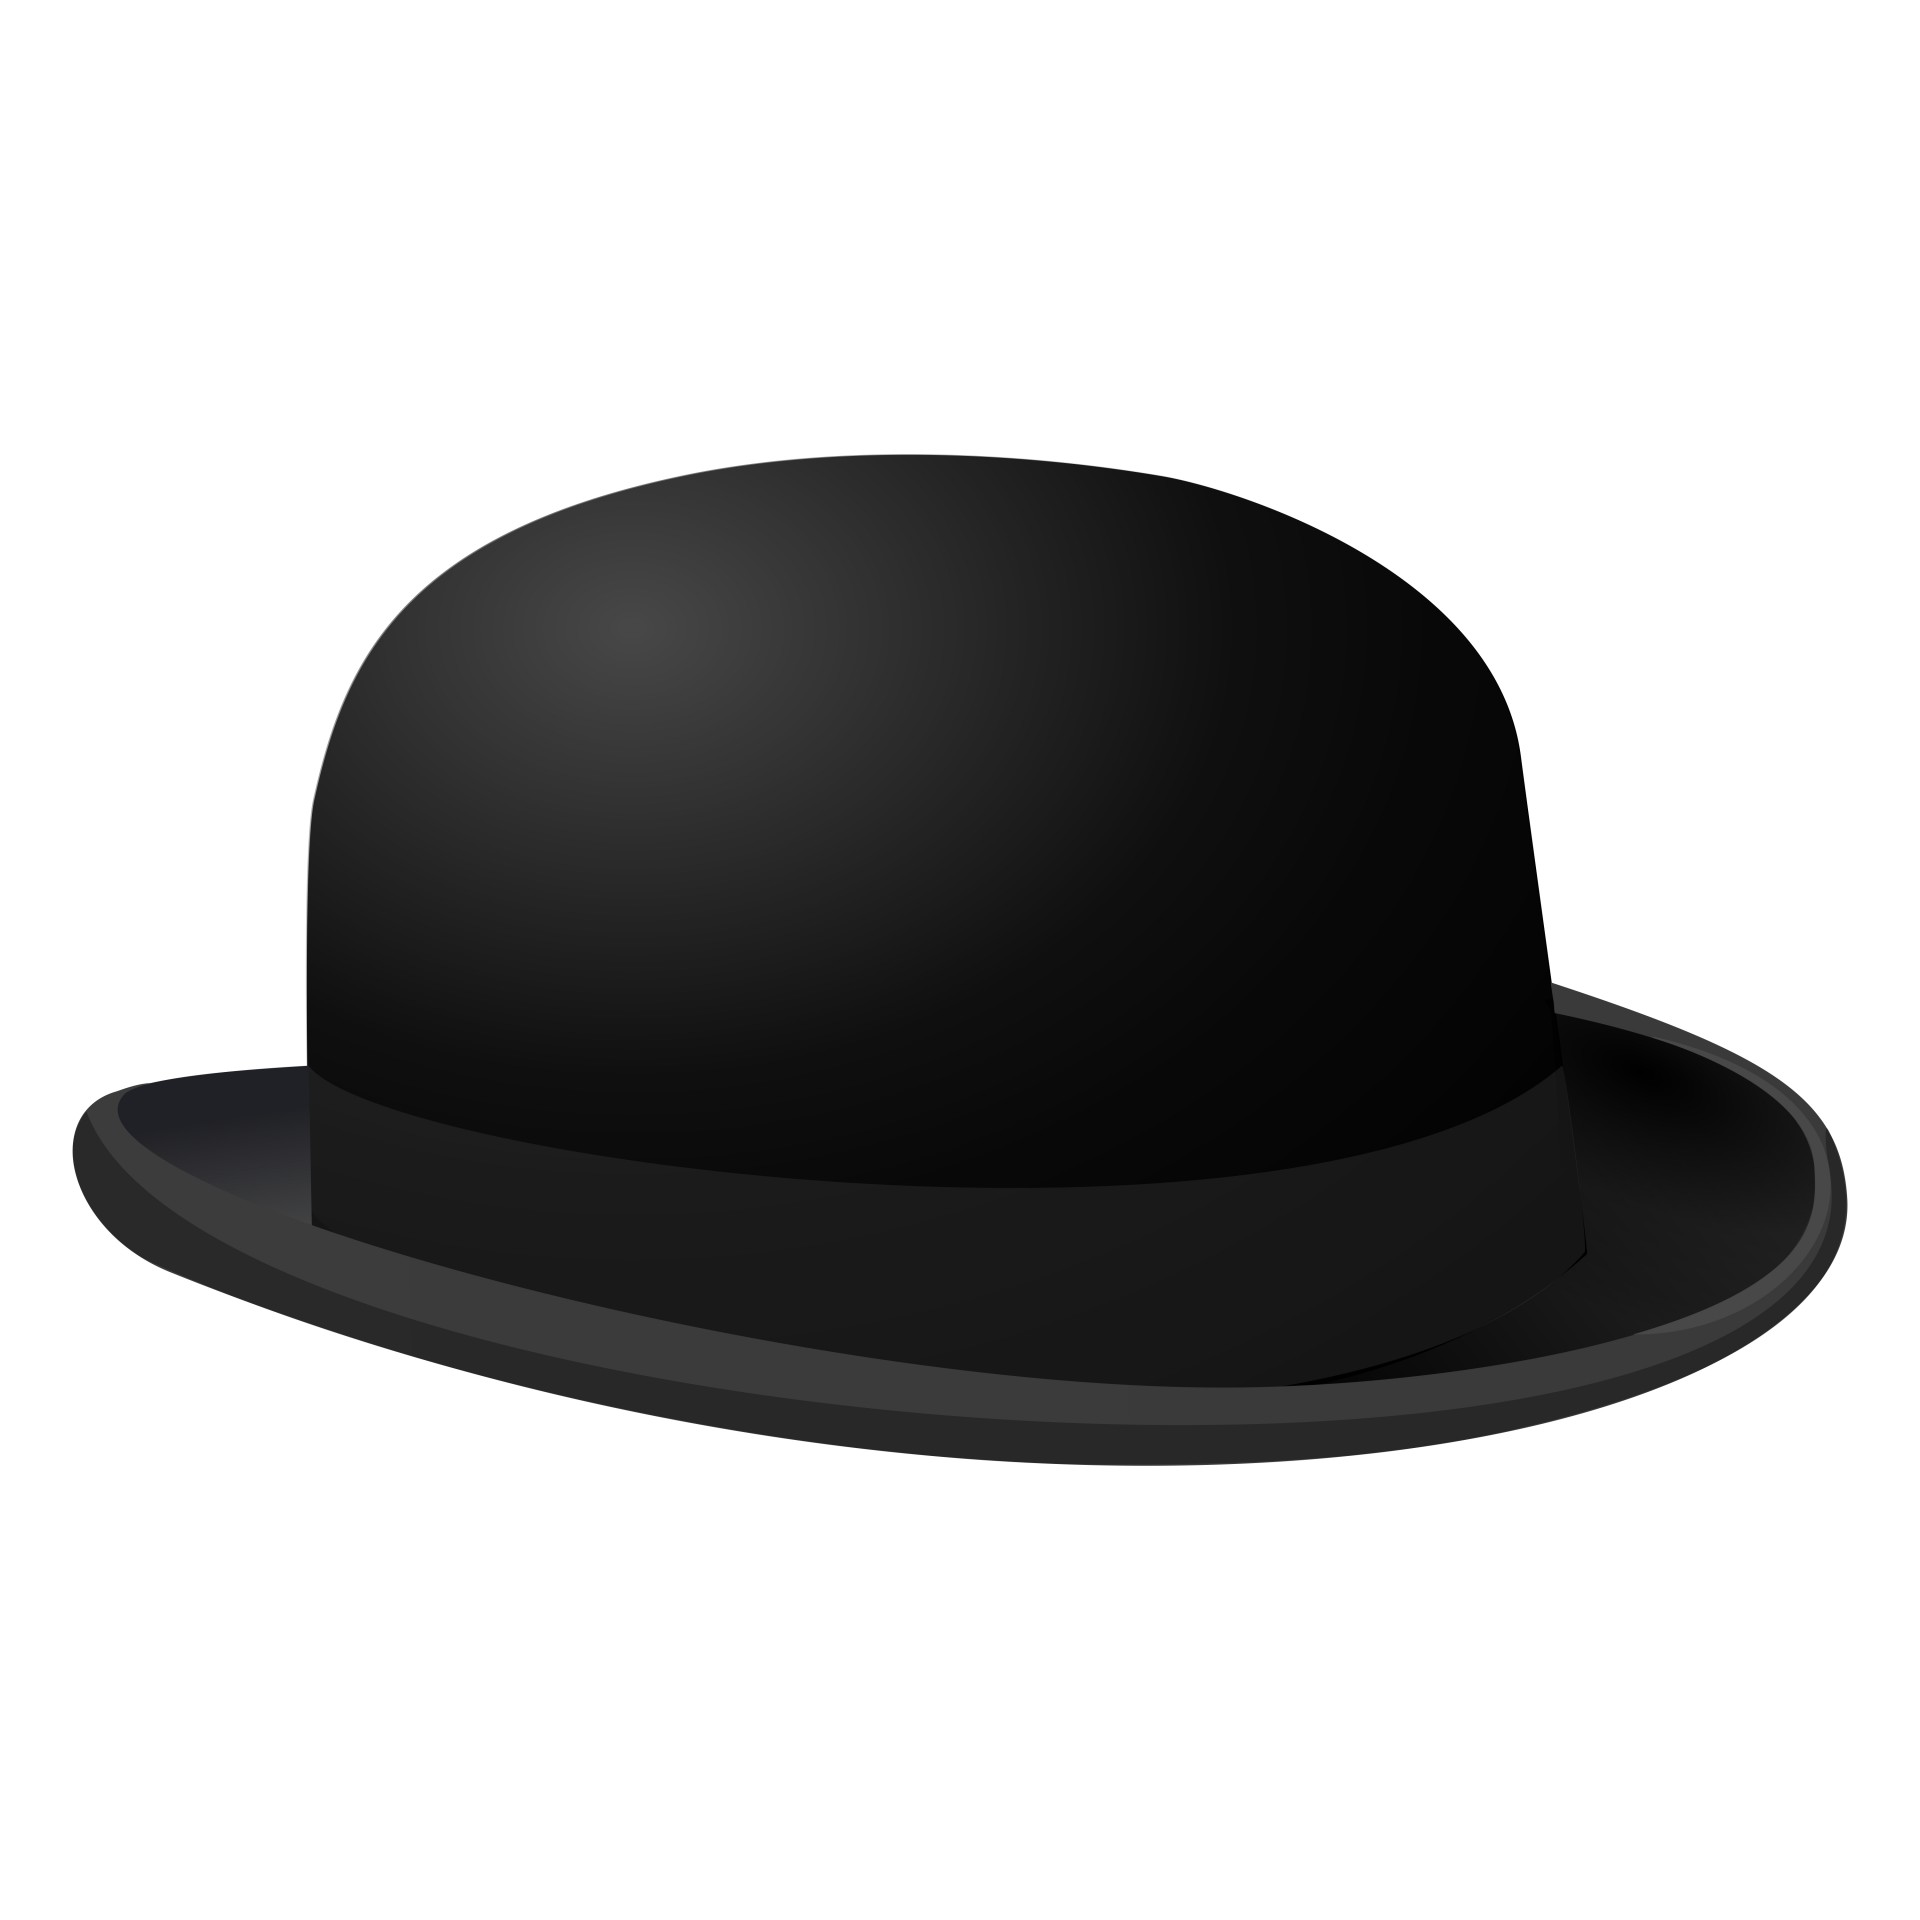 Silhouette Symbol Of Bowler Hat